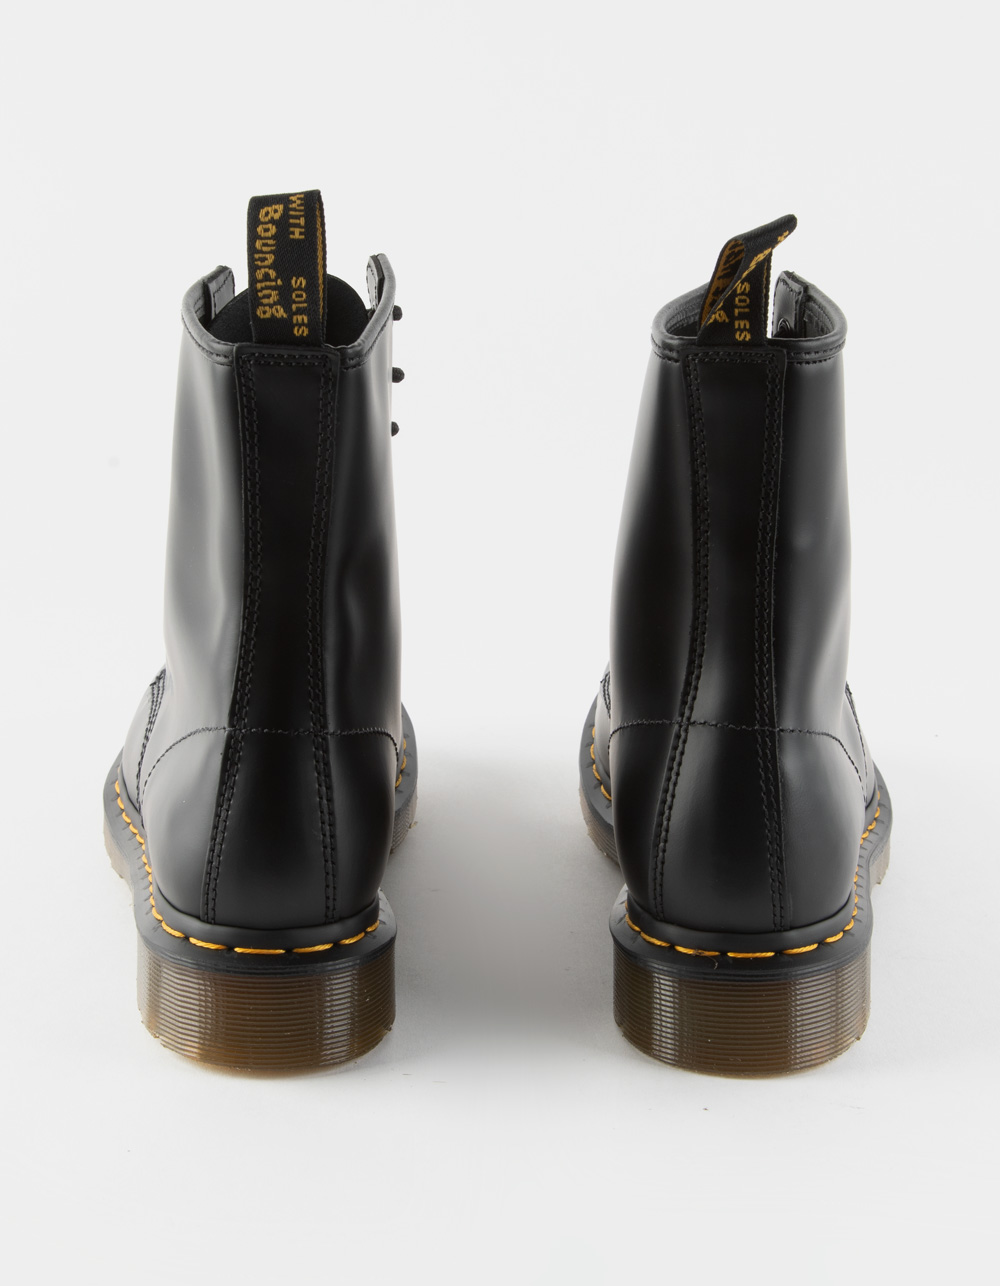 Conceit Lake Taupo Scheiden DR. MARTENS 1460 Womens Boots - BLACK | Tillys